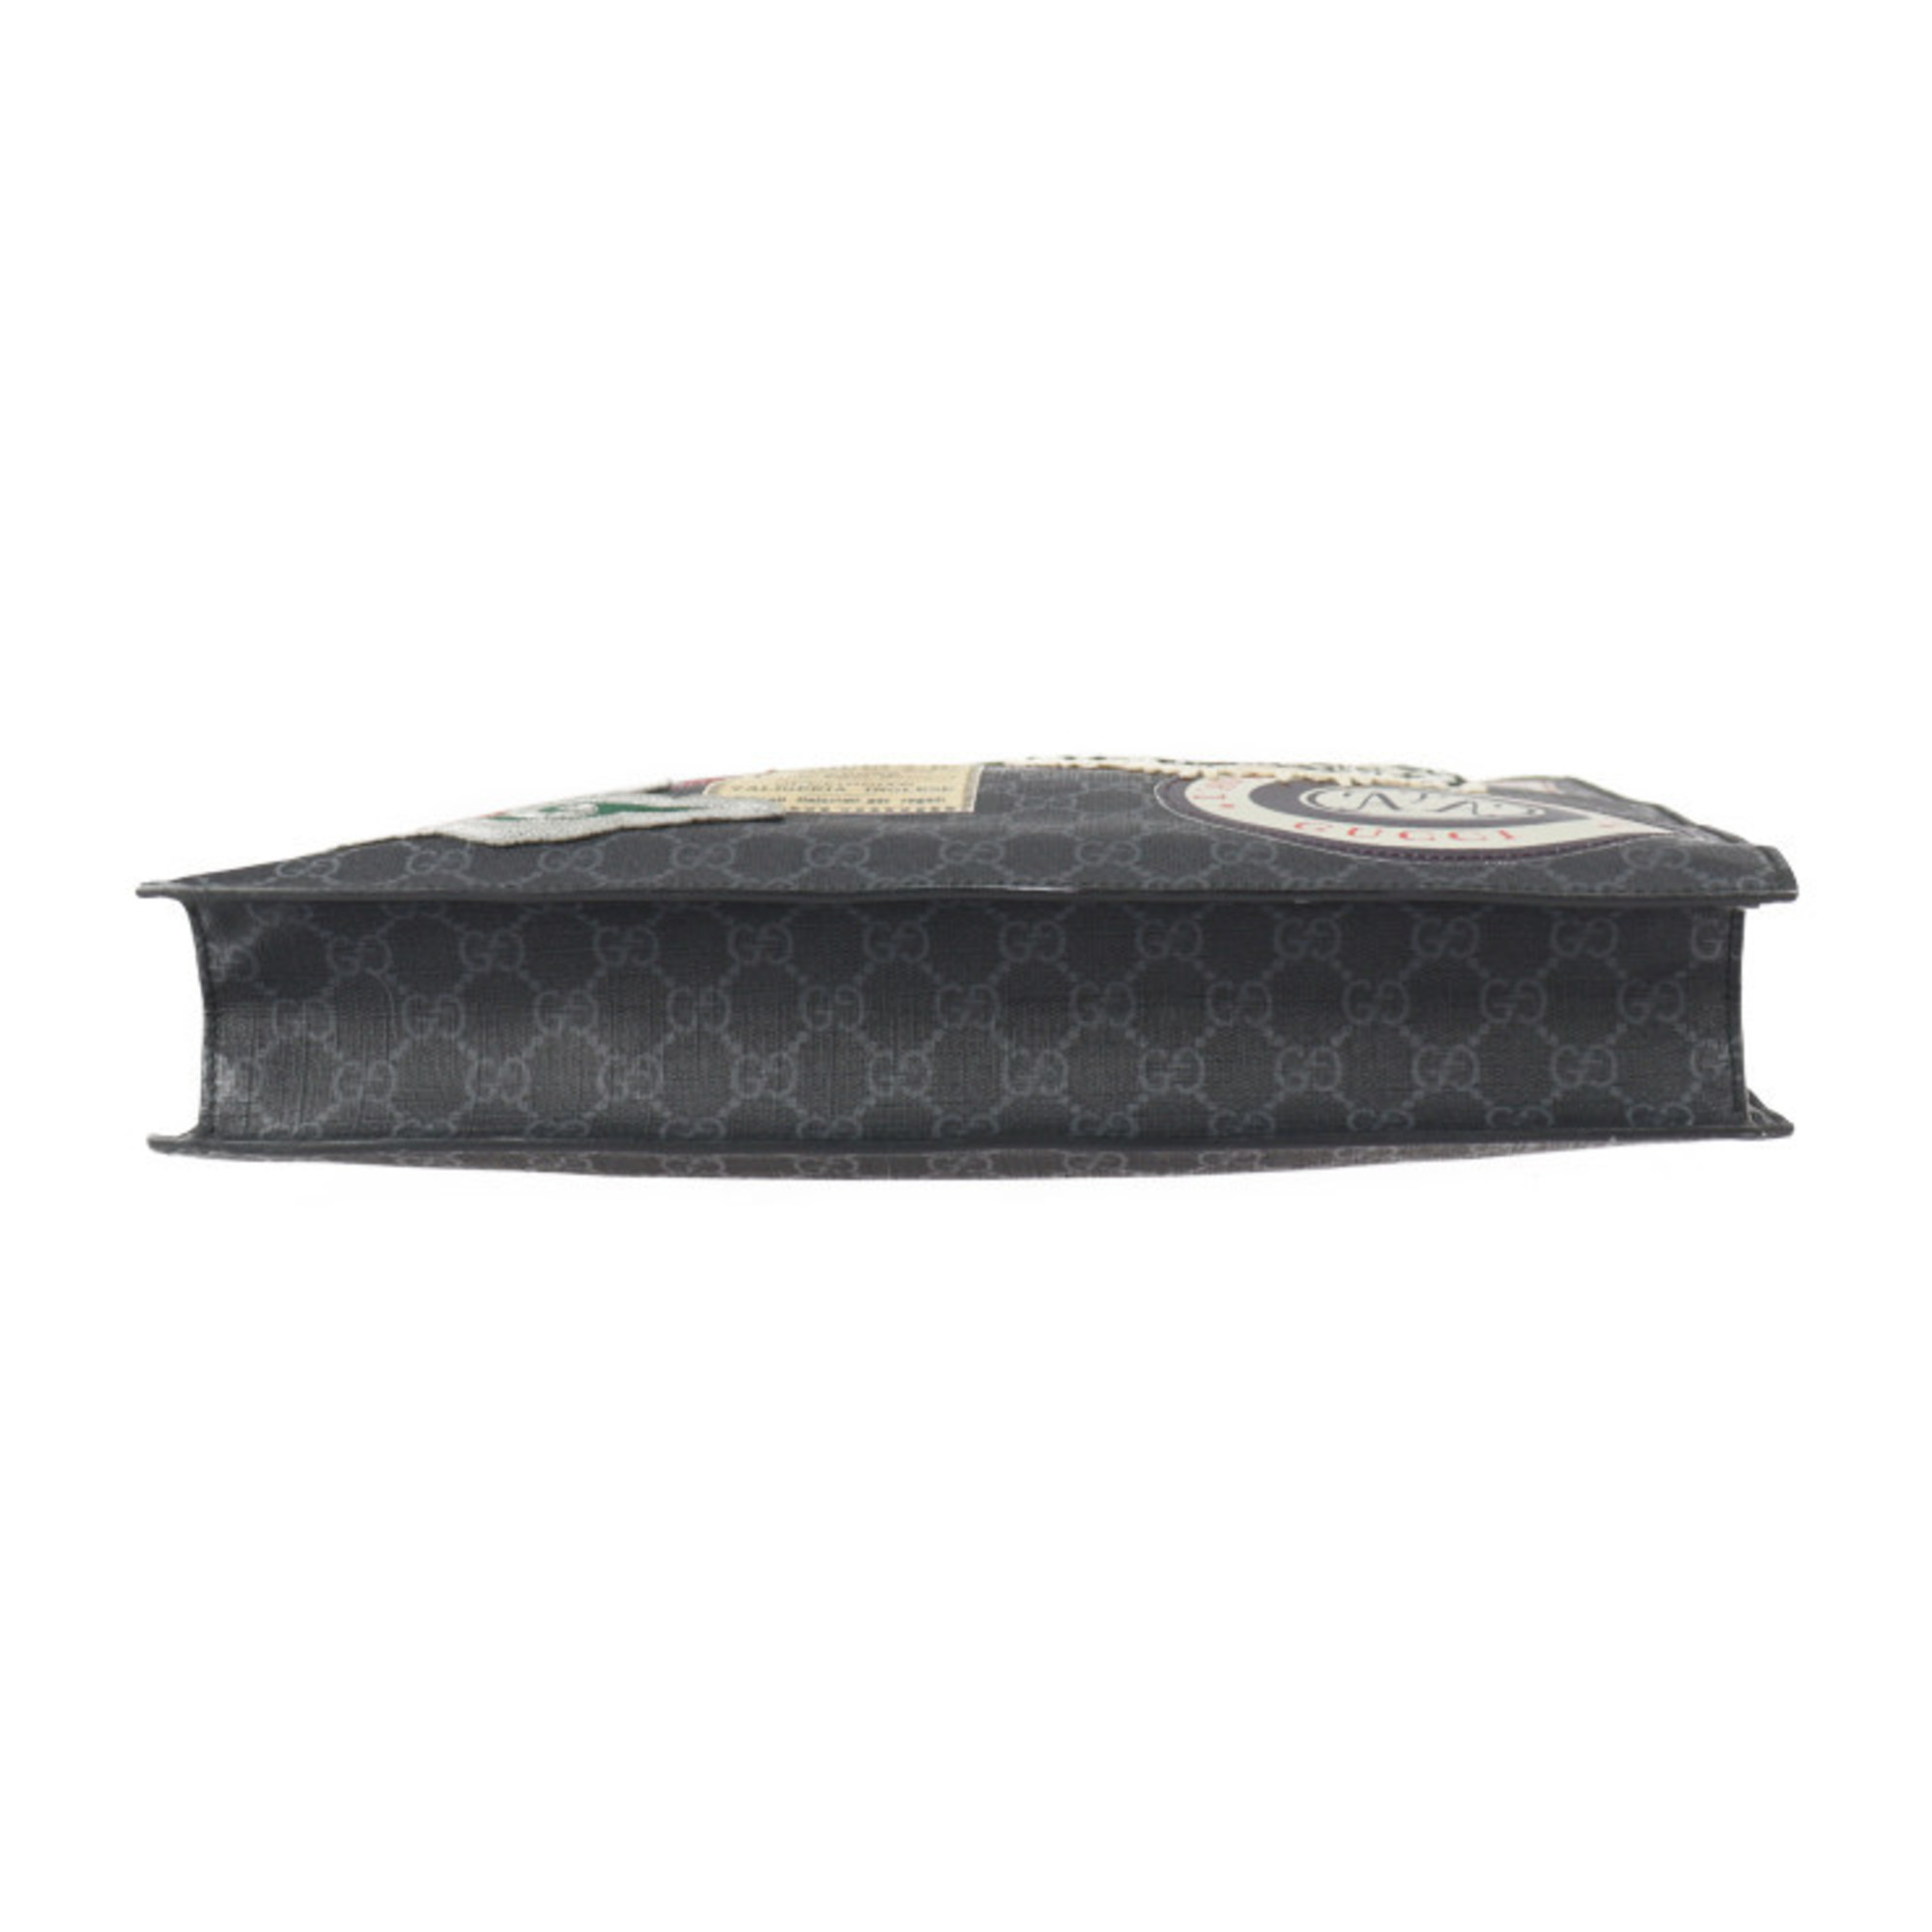 GUCCI Gucci GG Supreme Tote Bag 495559 PVC Leather Gray Multicolor 2WAY Shoulder Patch